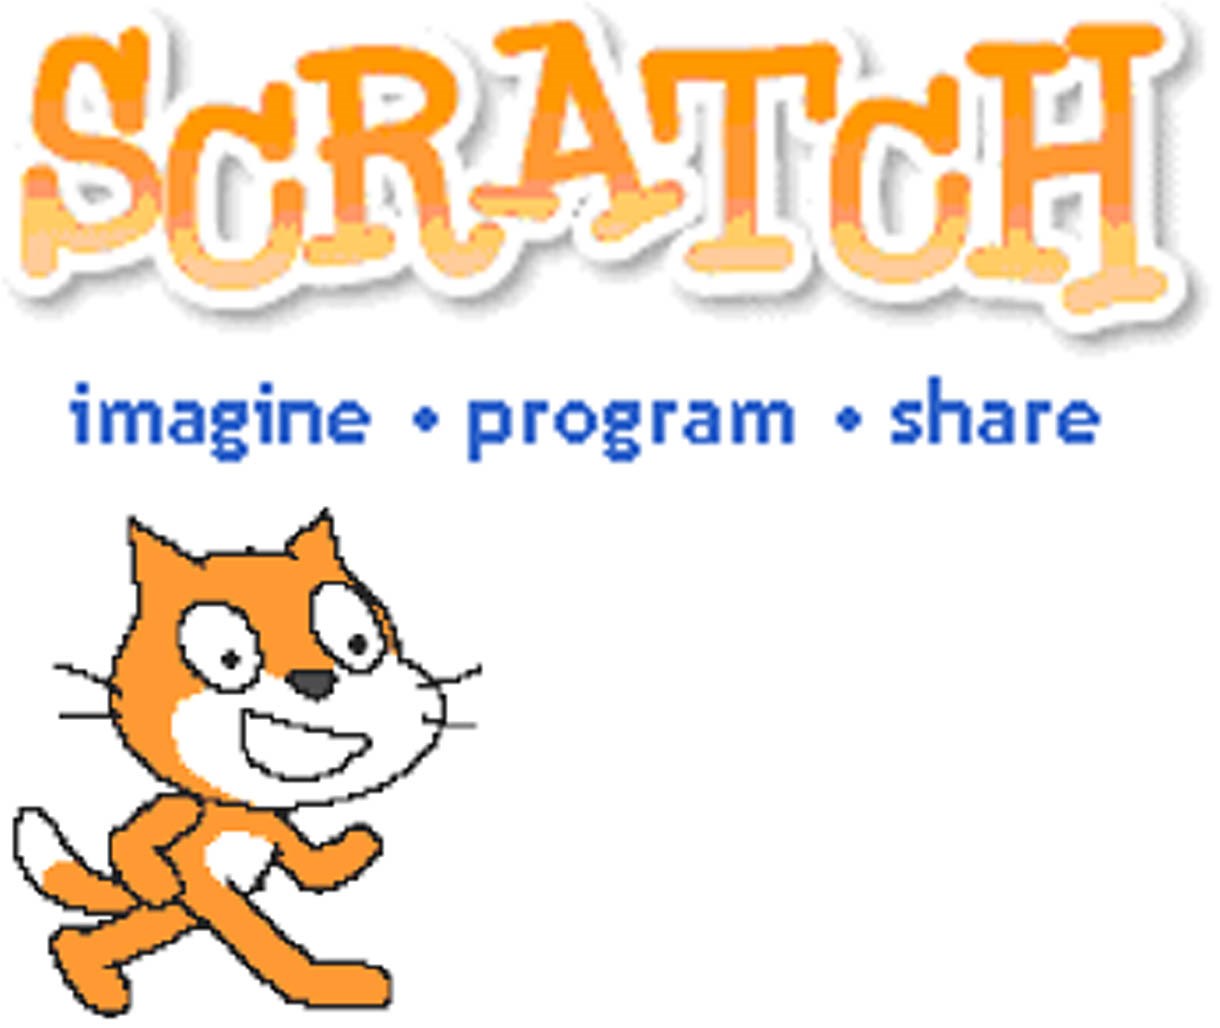 Scratch imagine program share